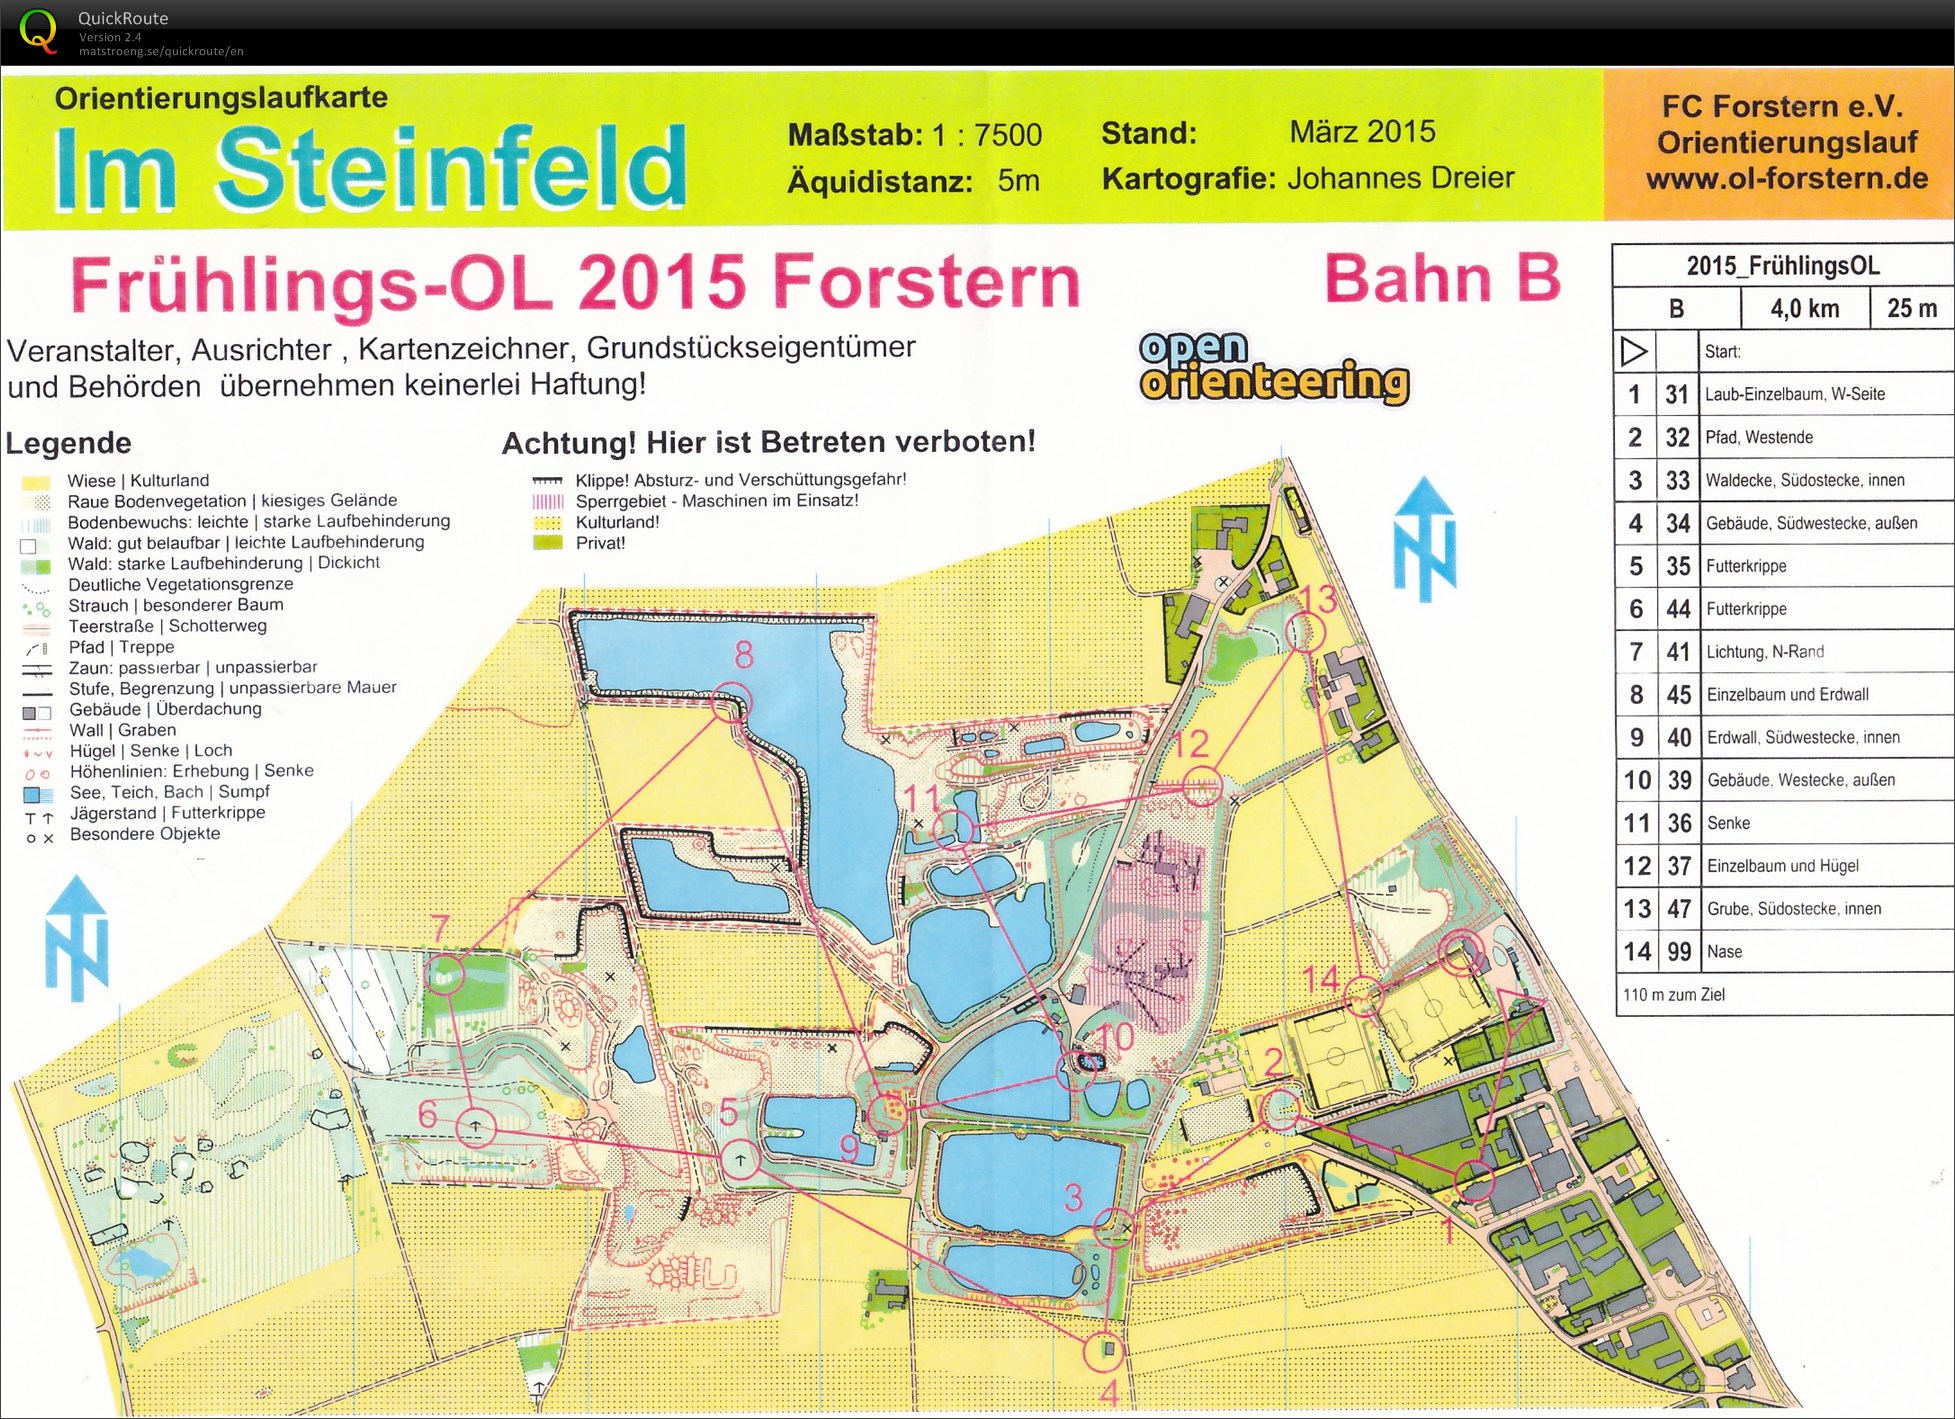 Frühlings-OL 2015 Forstern (29-03-2015)